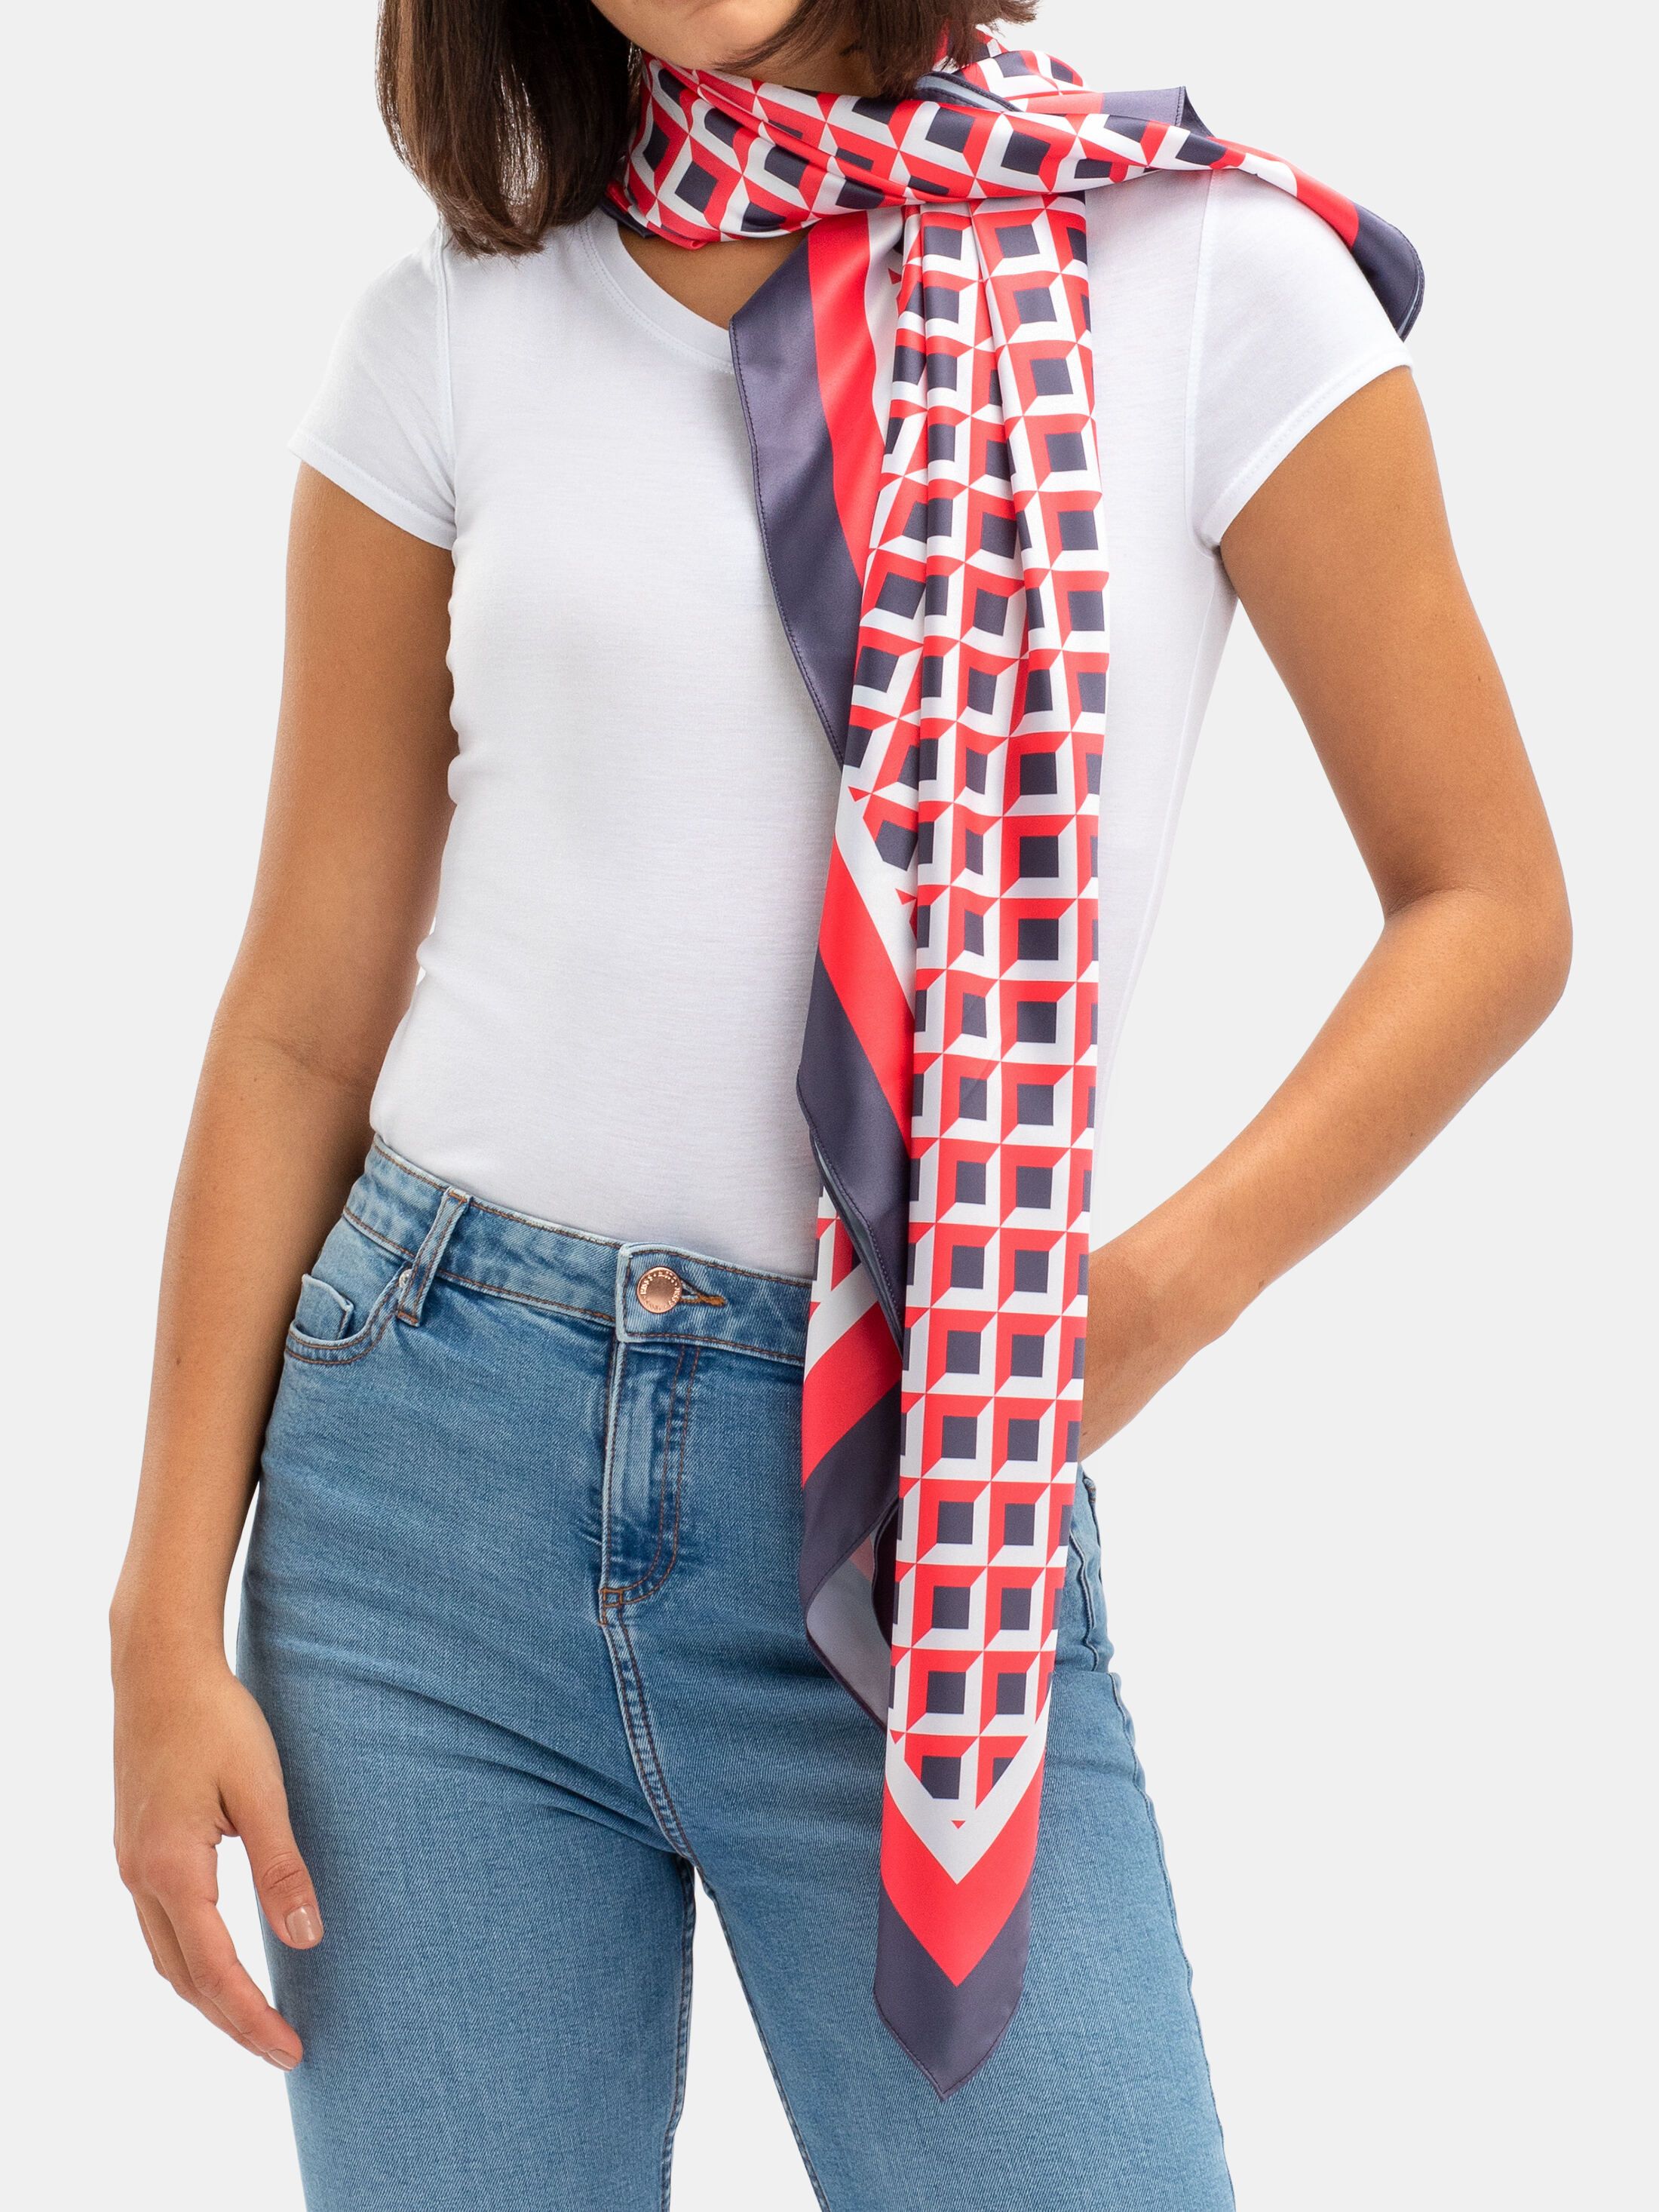 Printed silk scarf